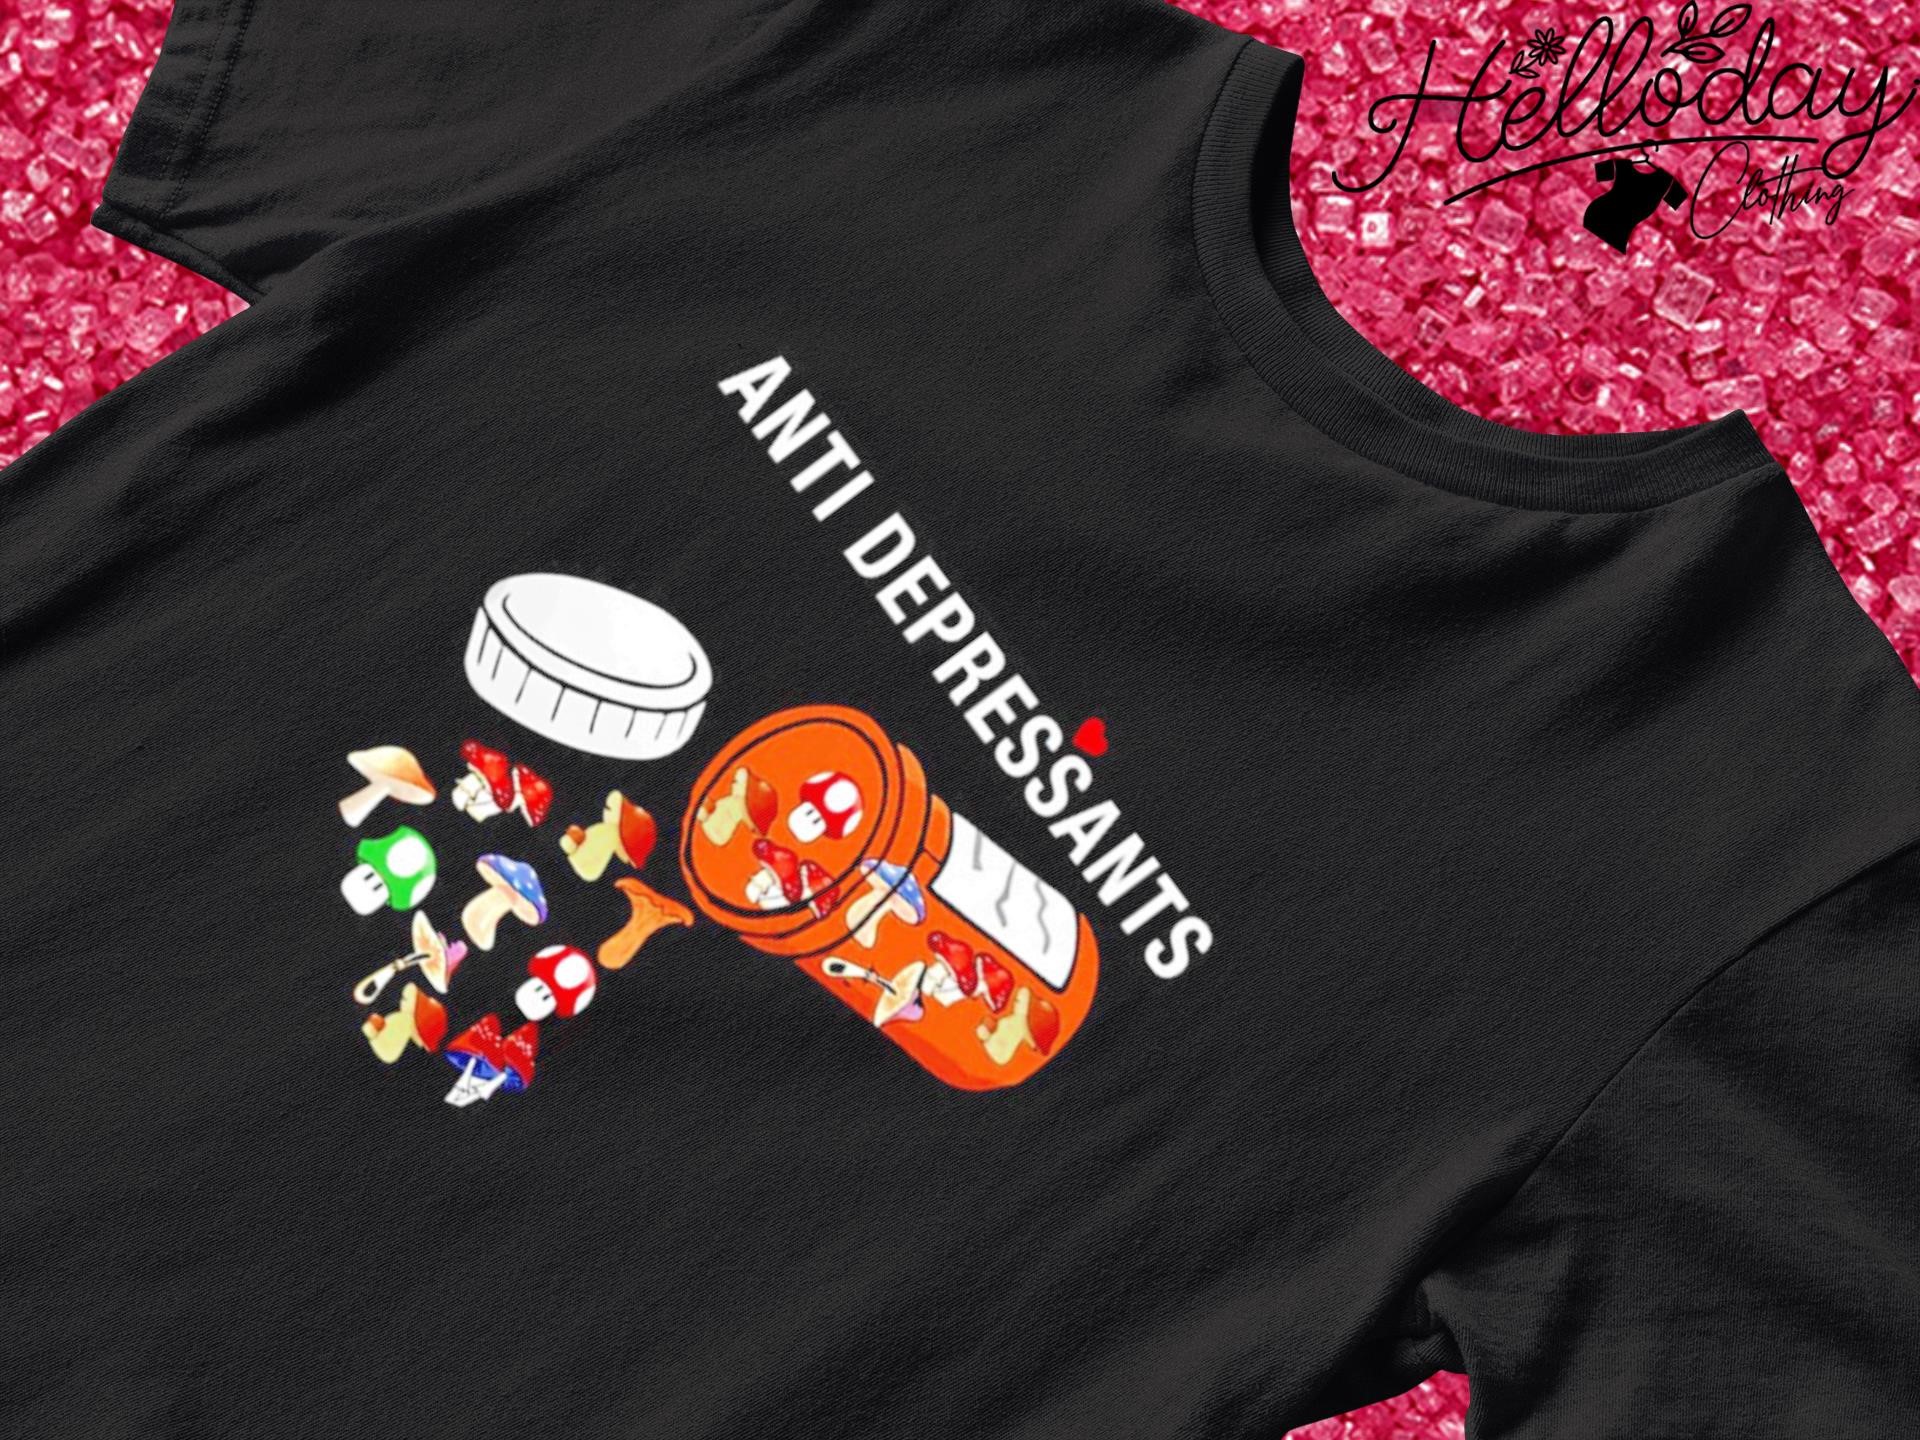 Apsychedelics Antidepressants Mushroom shirt